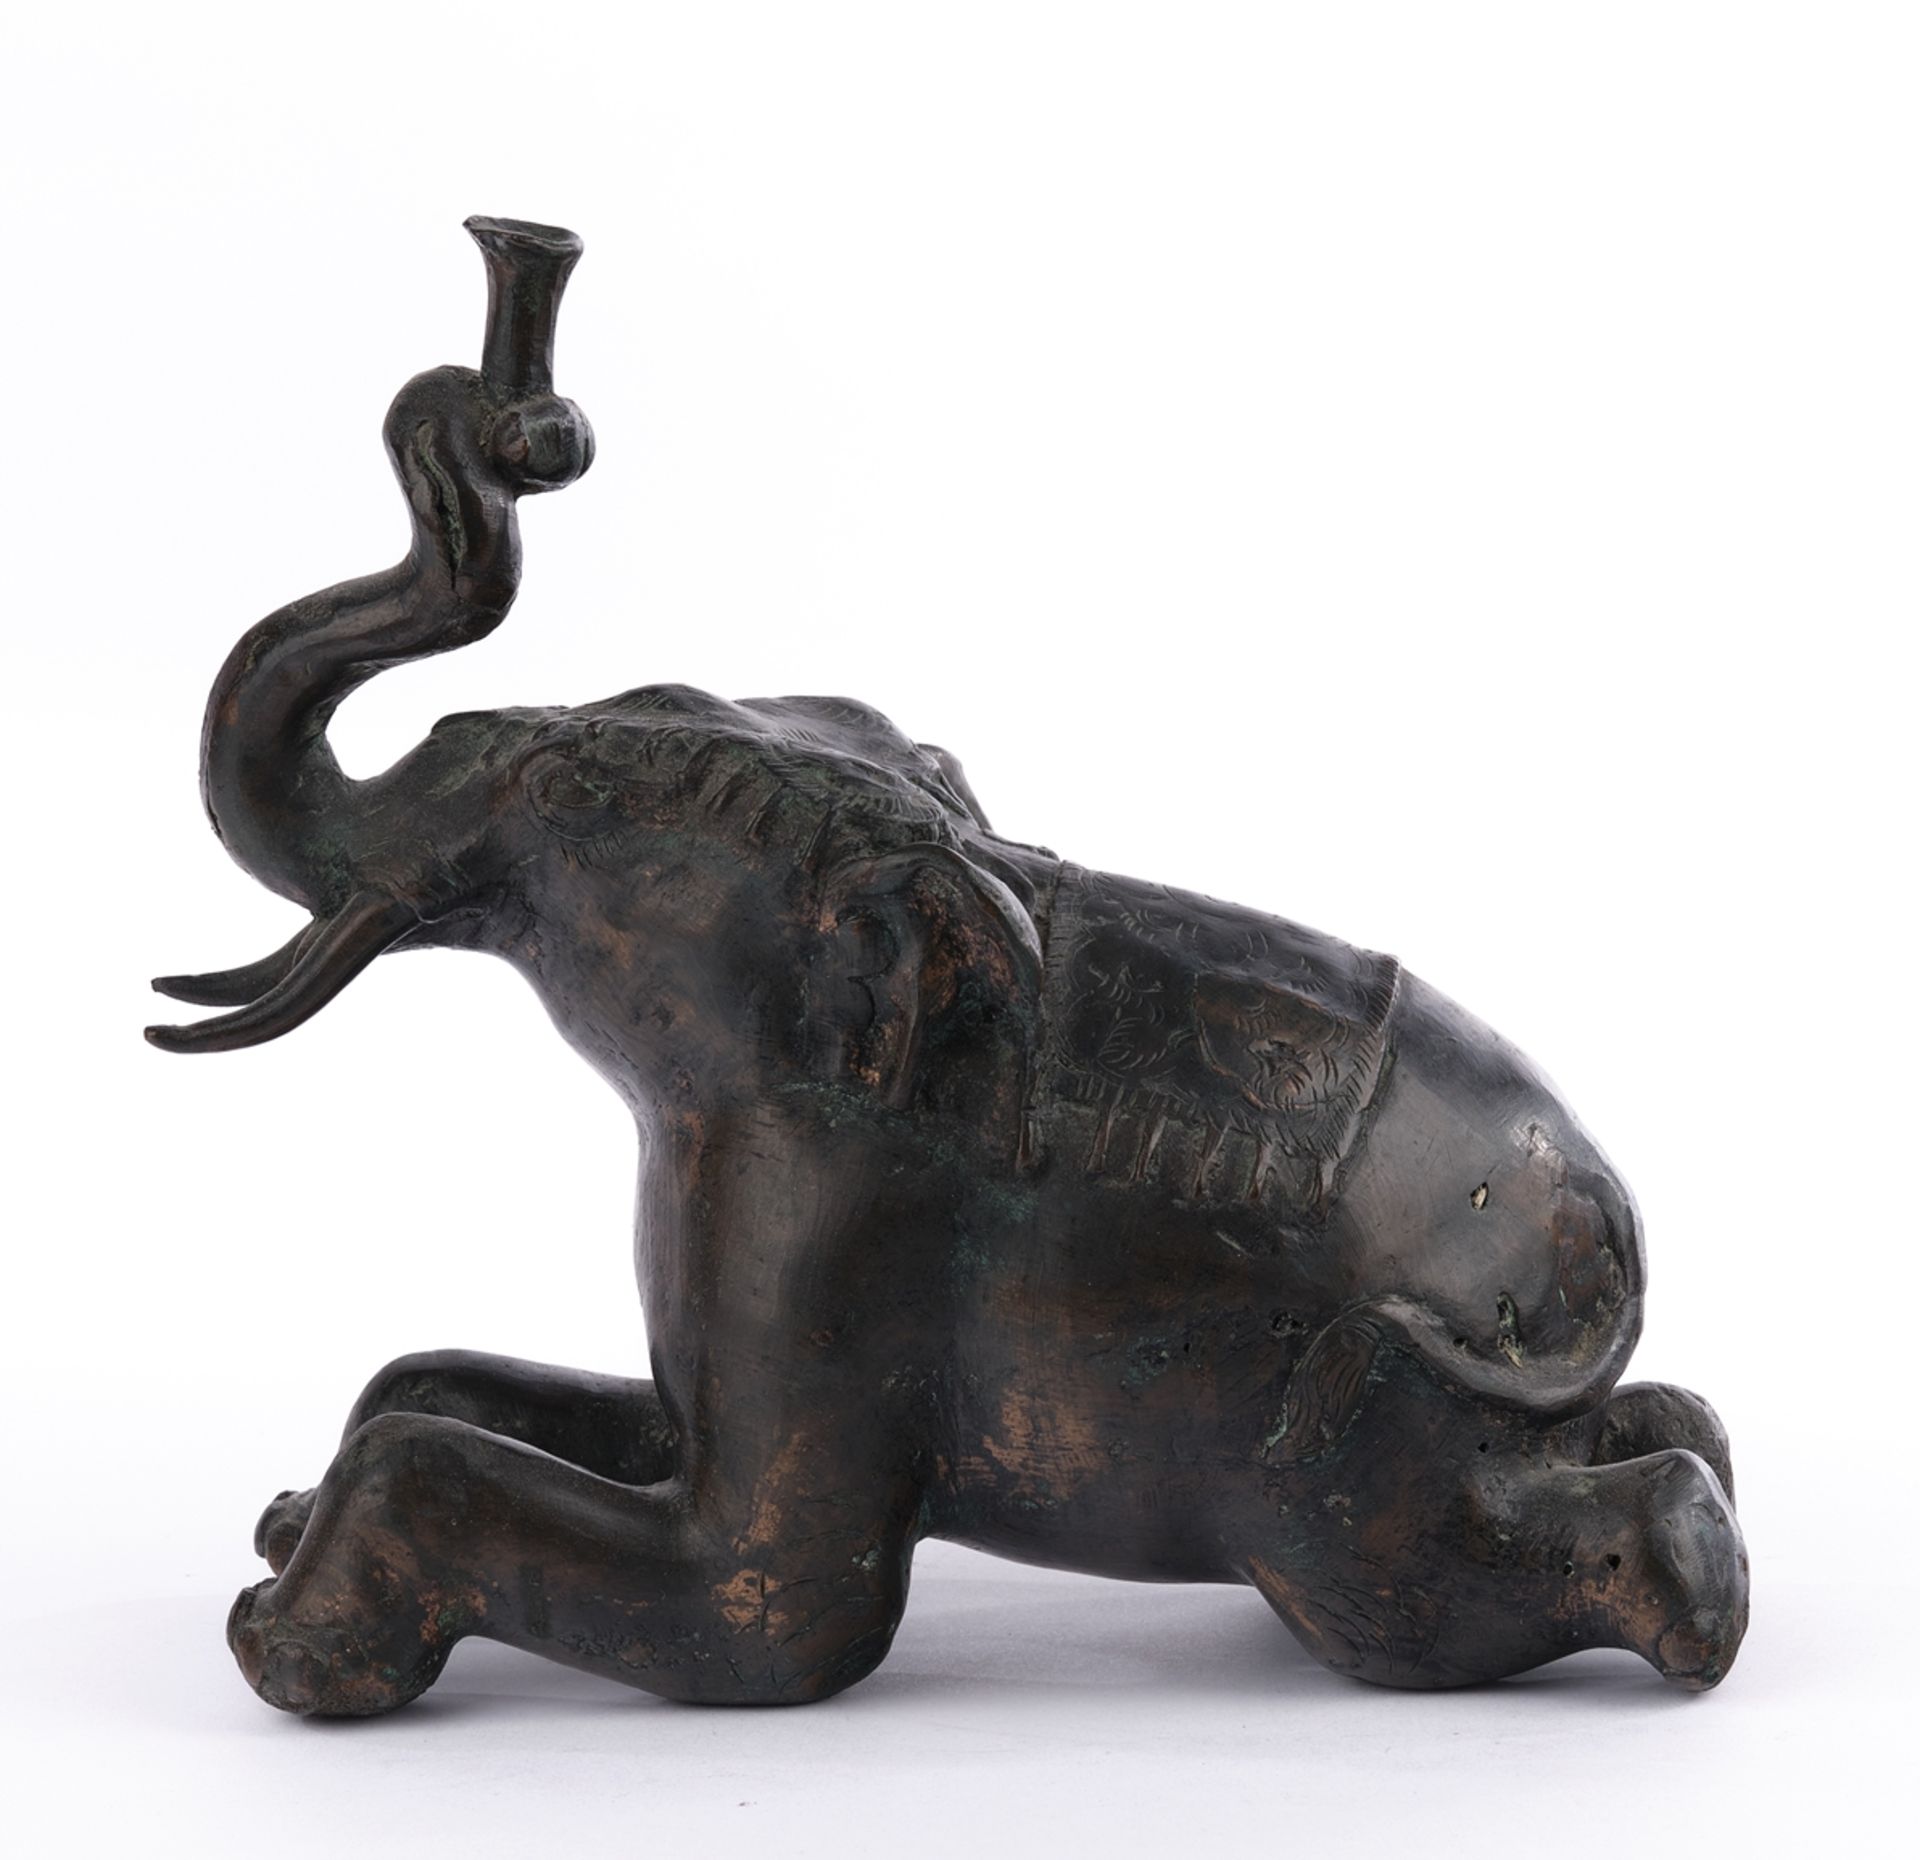 Sculpture, , "Reclining elephant", India, 20th/21st century, metal, dark patina, 22 cm high - Image 3 of 4